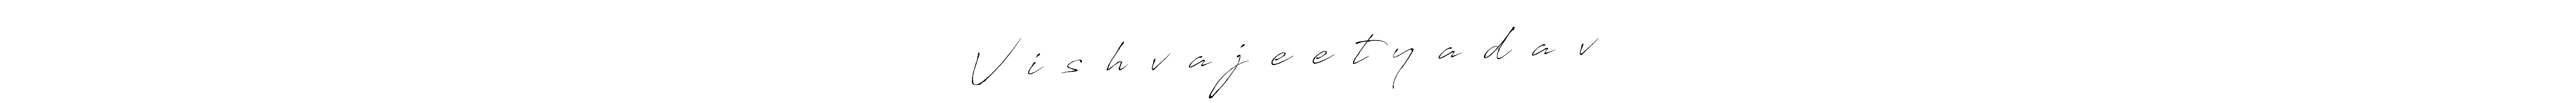 You can use this online signature creator to create a handwritten signature for the name V͓̽i͓̽s͓̽h͓̽v͓̽a͓̽j͓̽e͓̽e͓̽t͓̽y͓̽a͓̽d͓̽a͓̽v͓̽. This is the best online autograph maker. V͓̽i͓̽s͓̽h͓̽v͓̽a͓̽j͓̽e͓̽e͓̽t͓̽y͓̽a͓̽d͓̽a͓̽v͓̽ signature style 6 images and pictures png